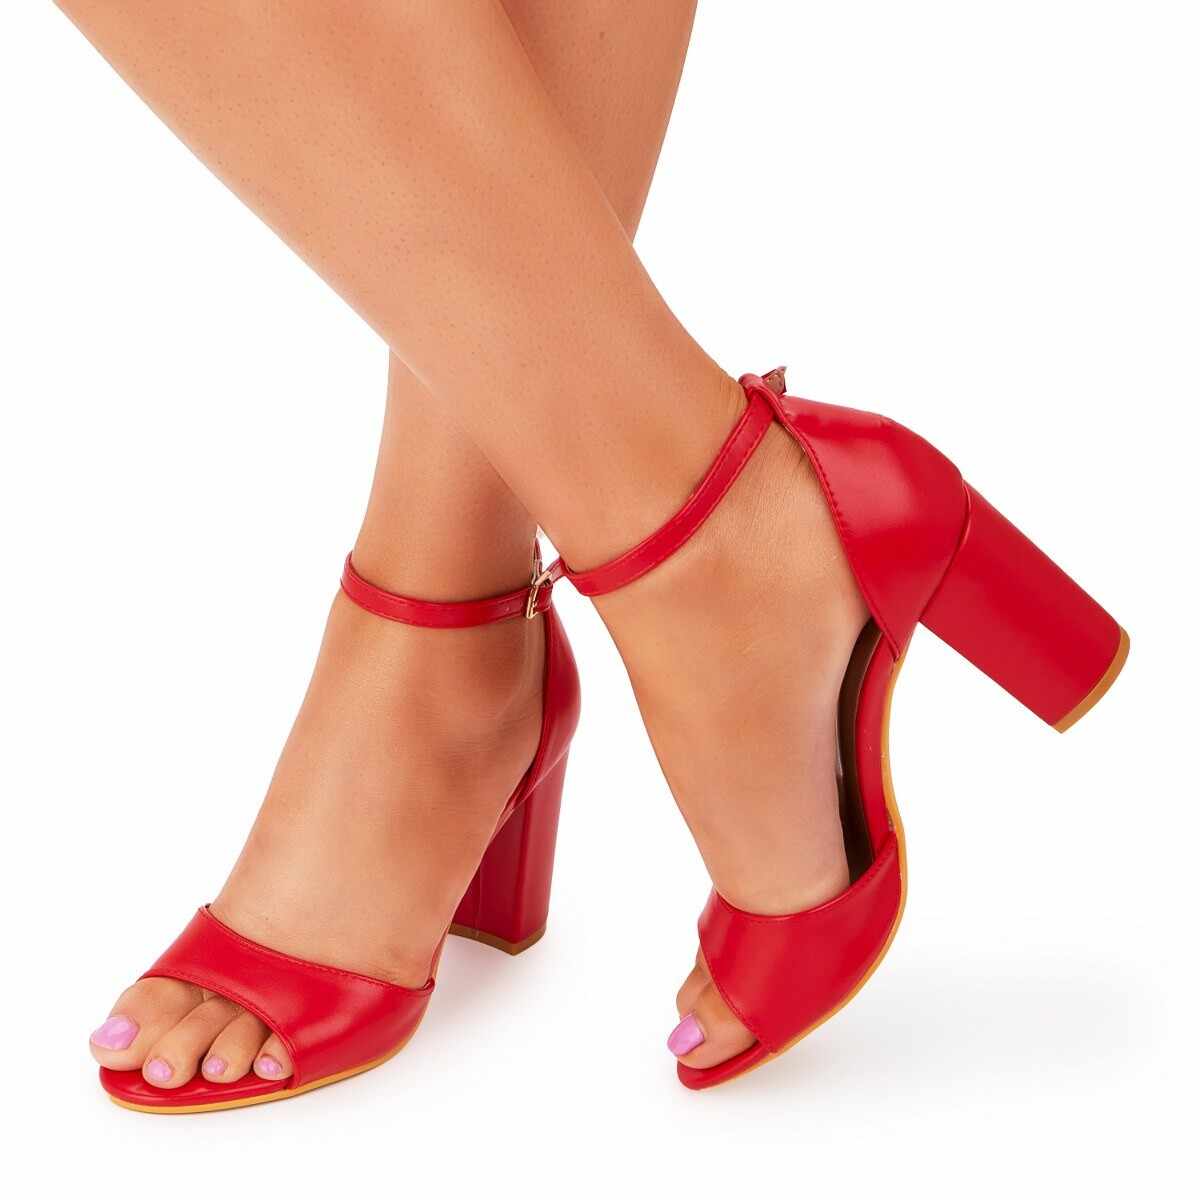 Sandale Dama Rosii Cu Bareta Umilta